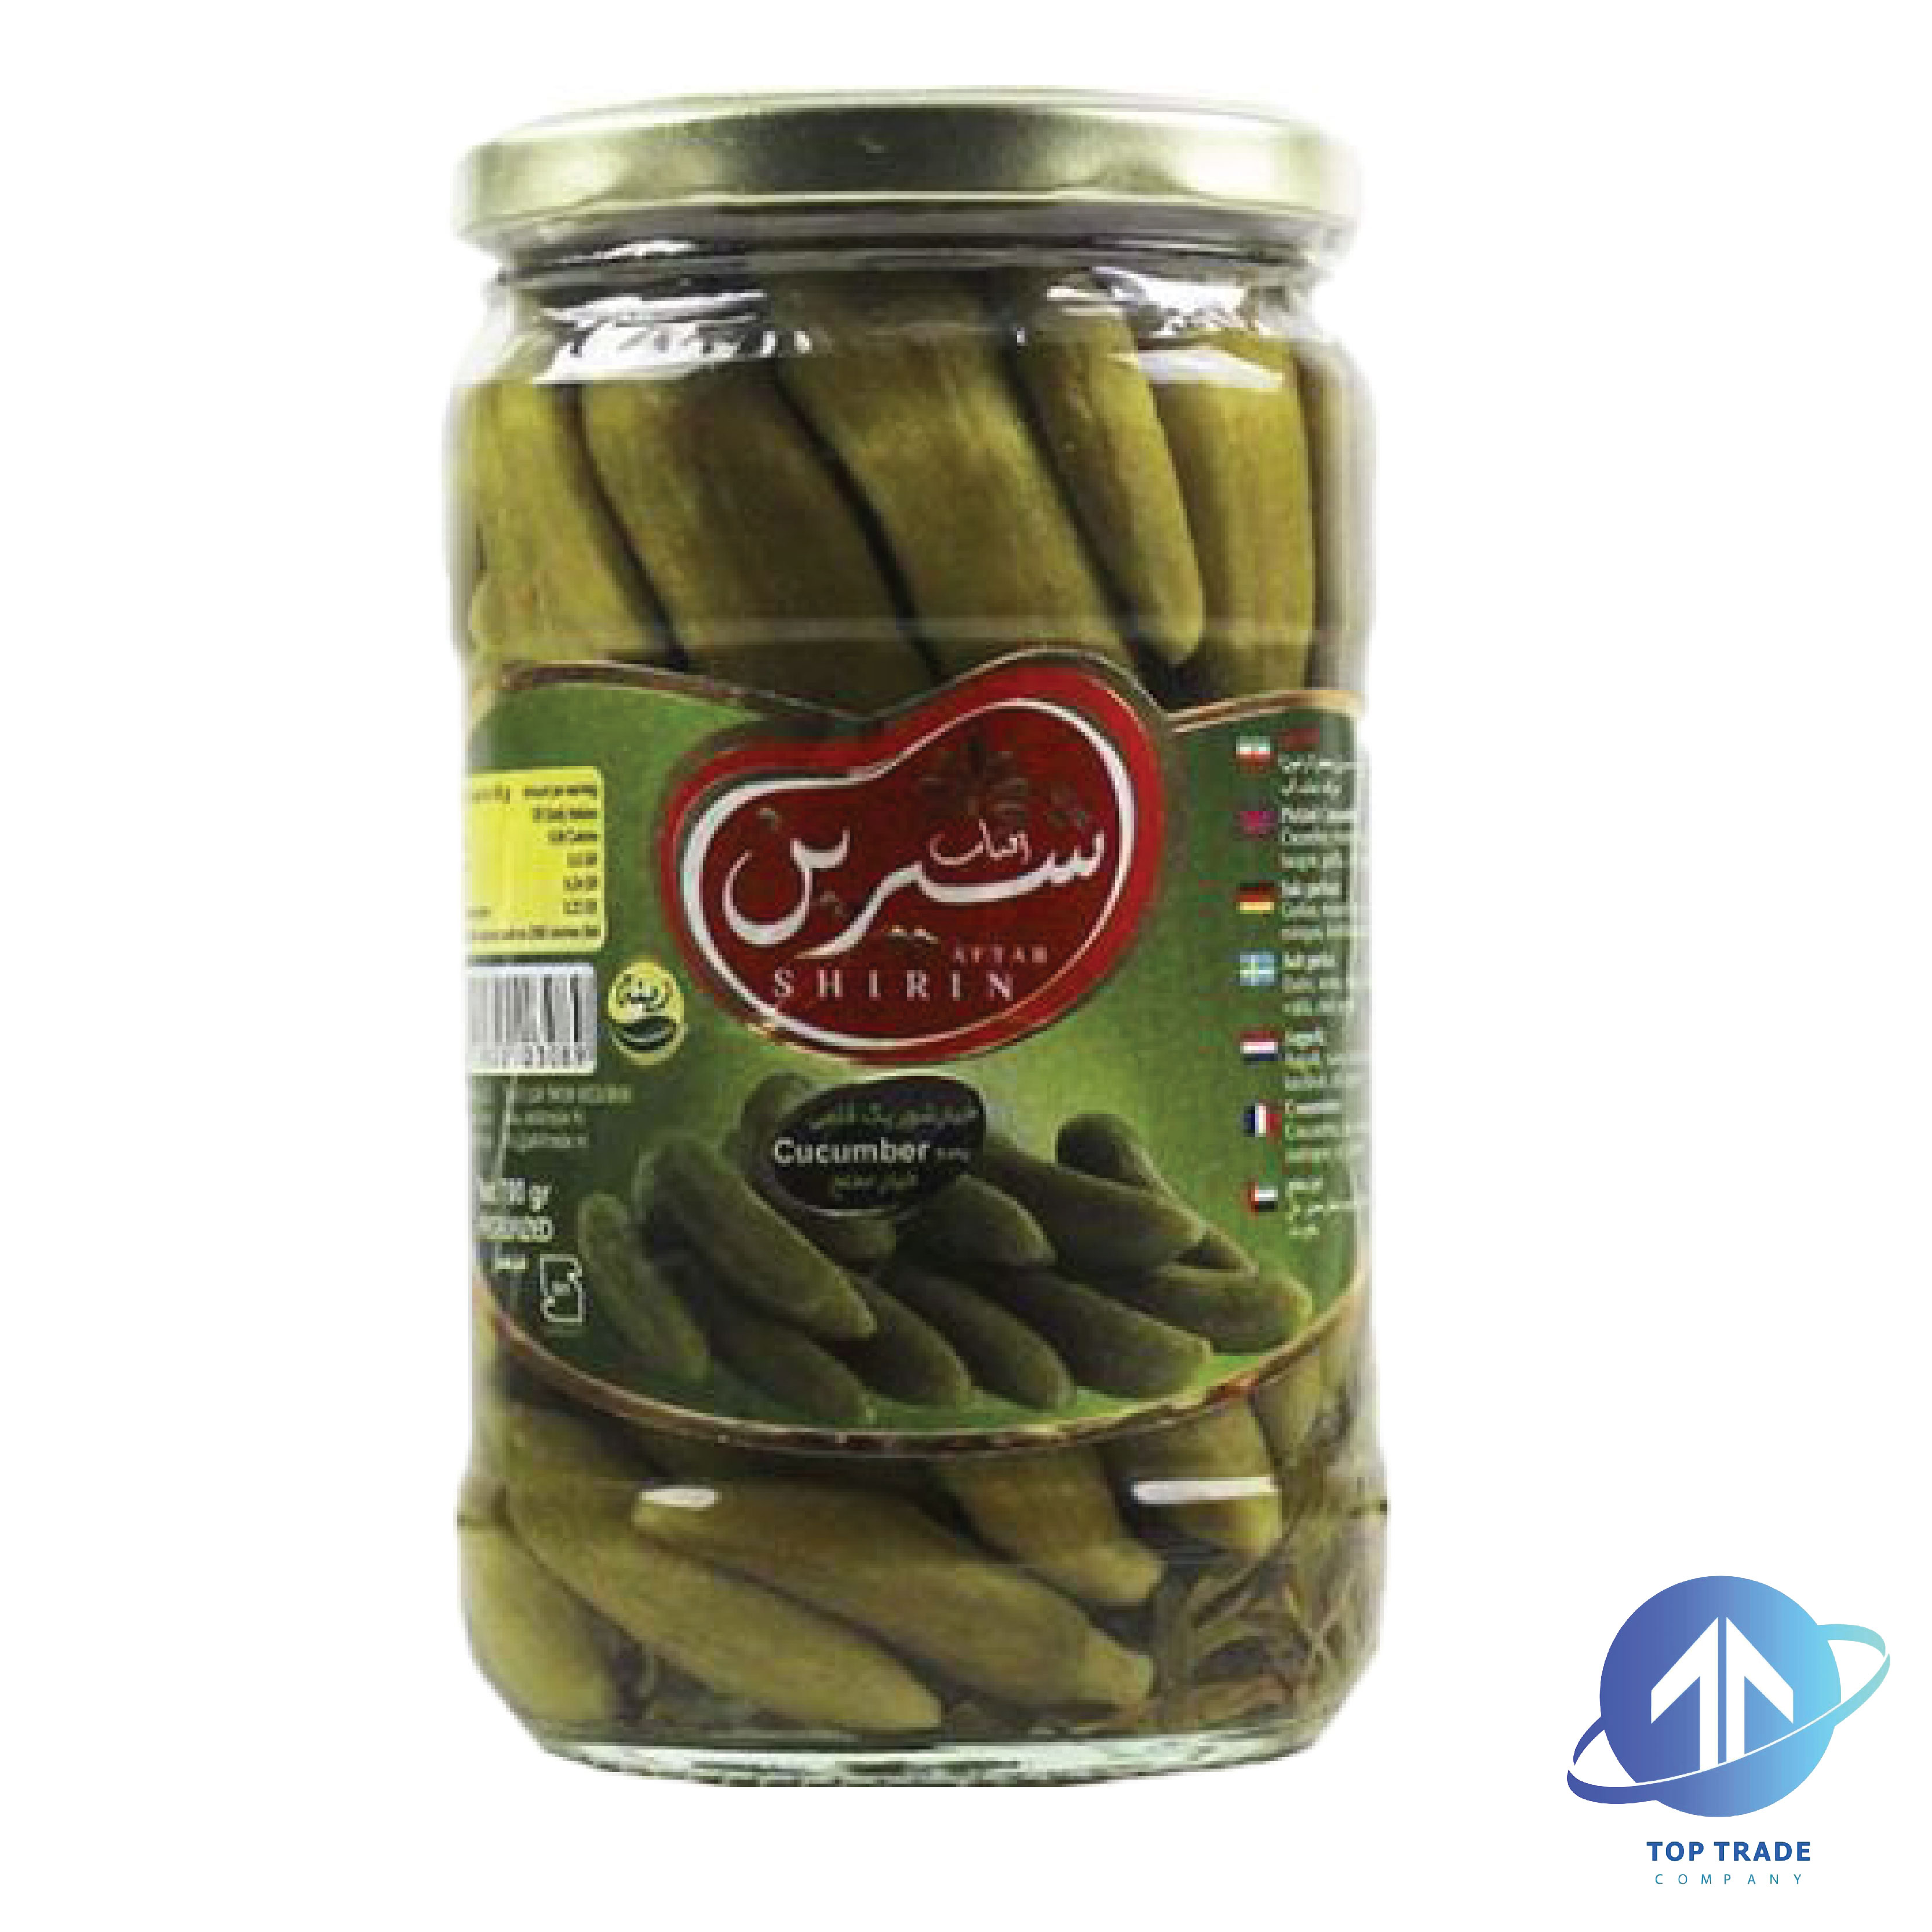 Aftab shirin Small Cucumber pickles 700gr 